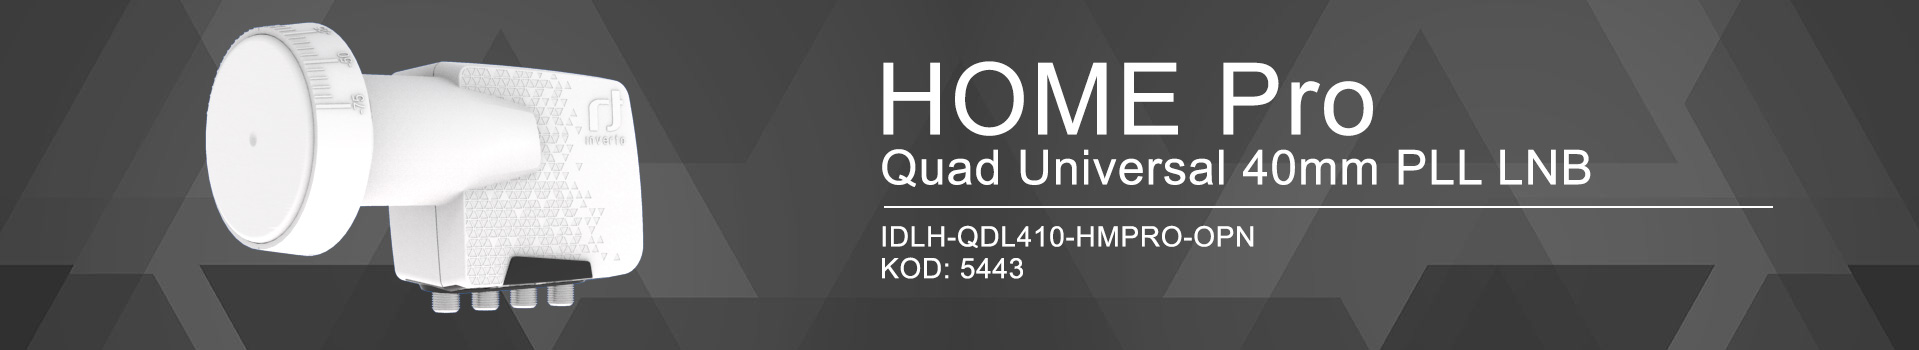 konwerter satelitarny Inverto Quad Home Pro IDLH-QDL410-HMPRO-OPN